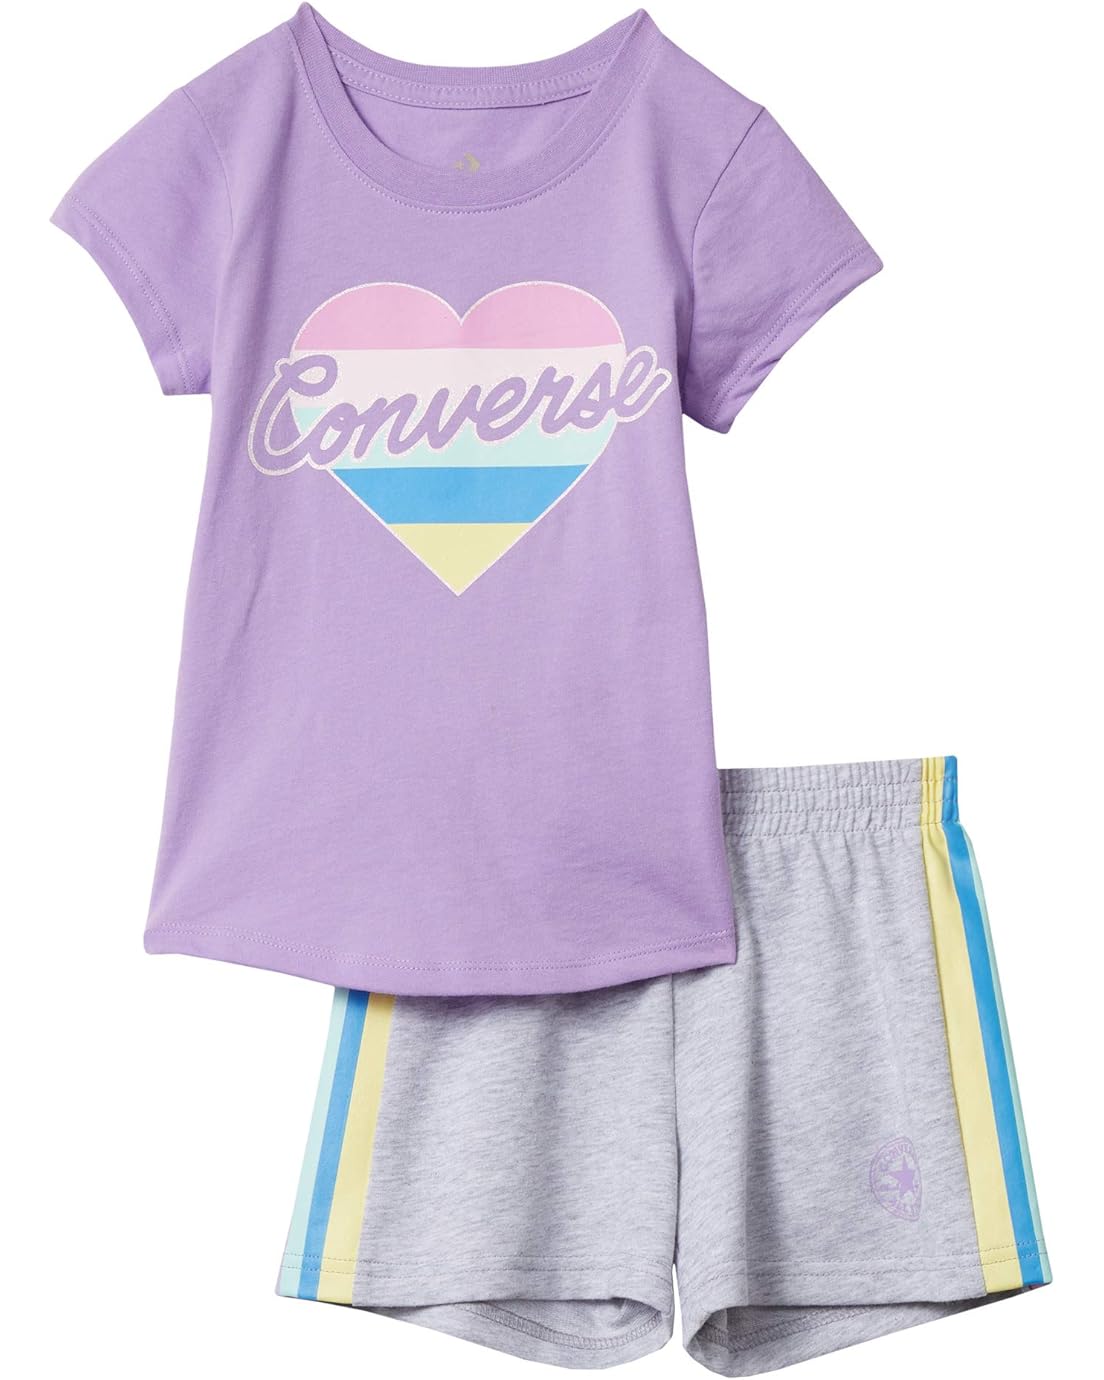 Converse Kids Graphic T-Shirt & Shorts Set (Little Kids)